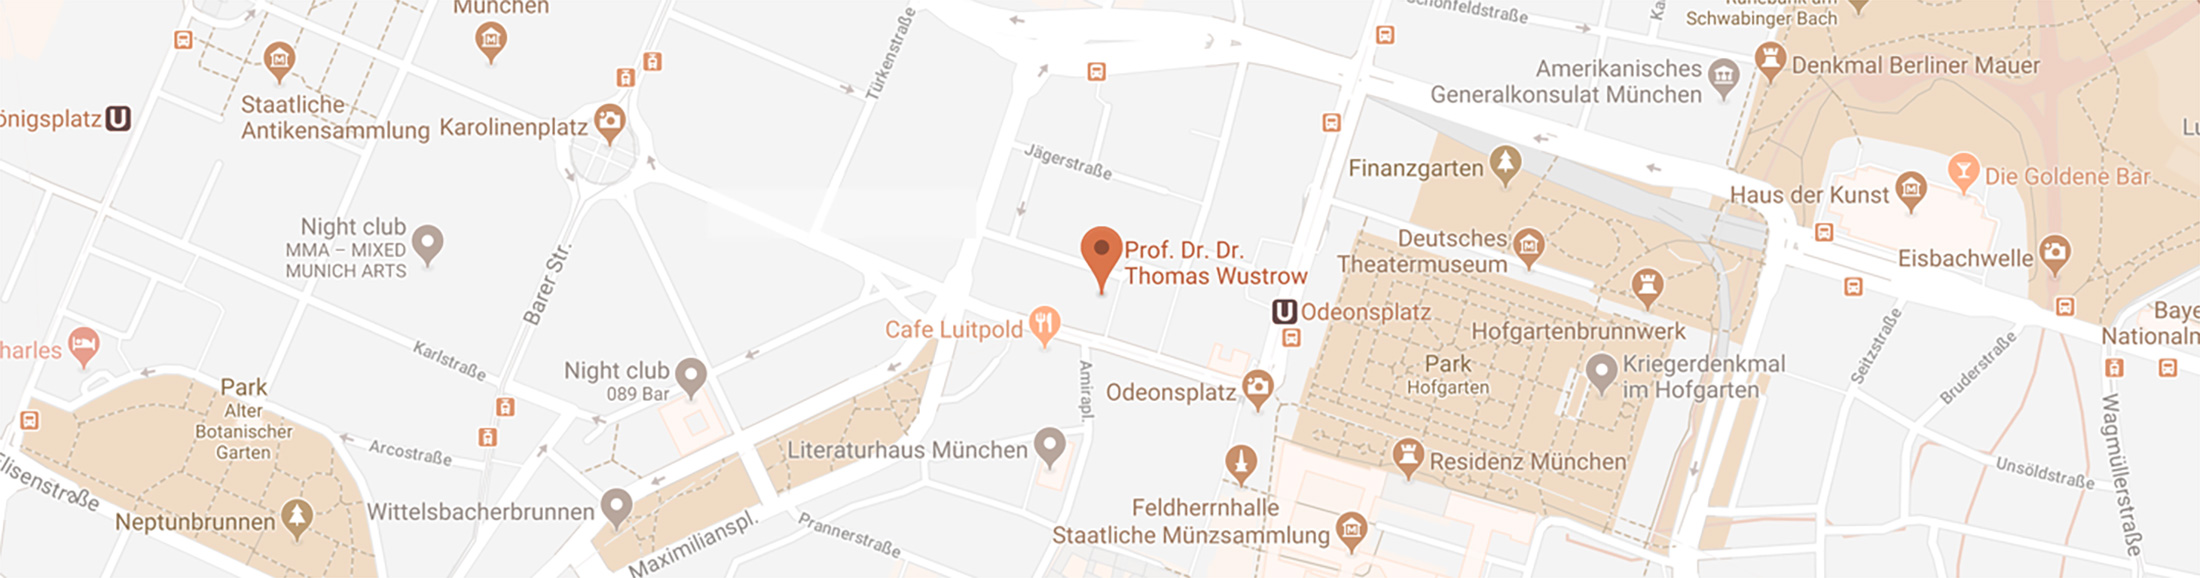 Map View 2200px - Traumatologie München